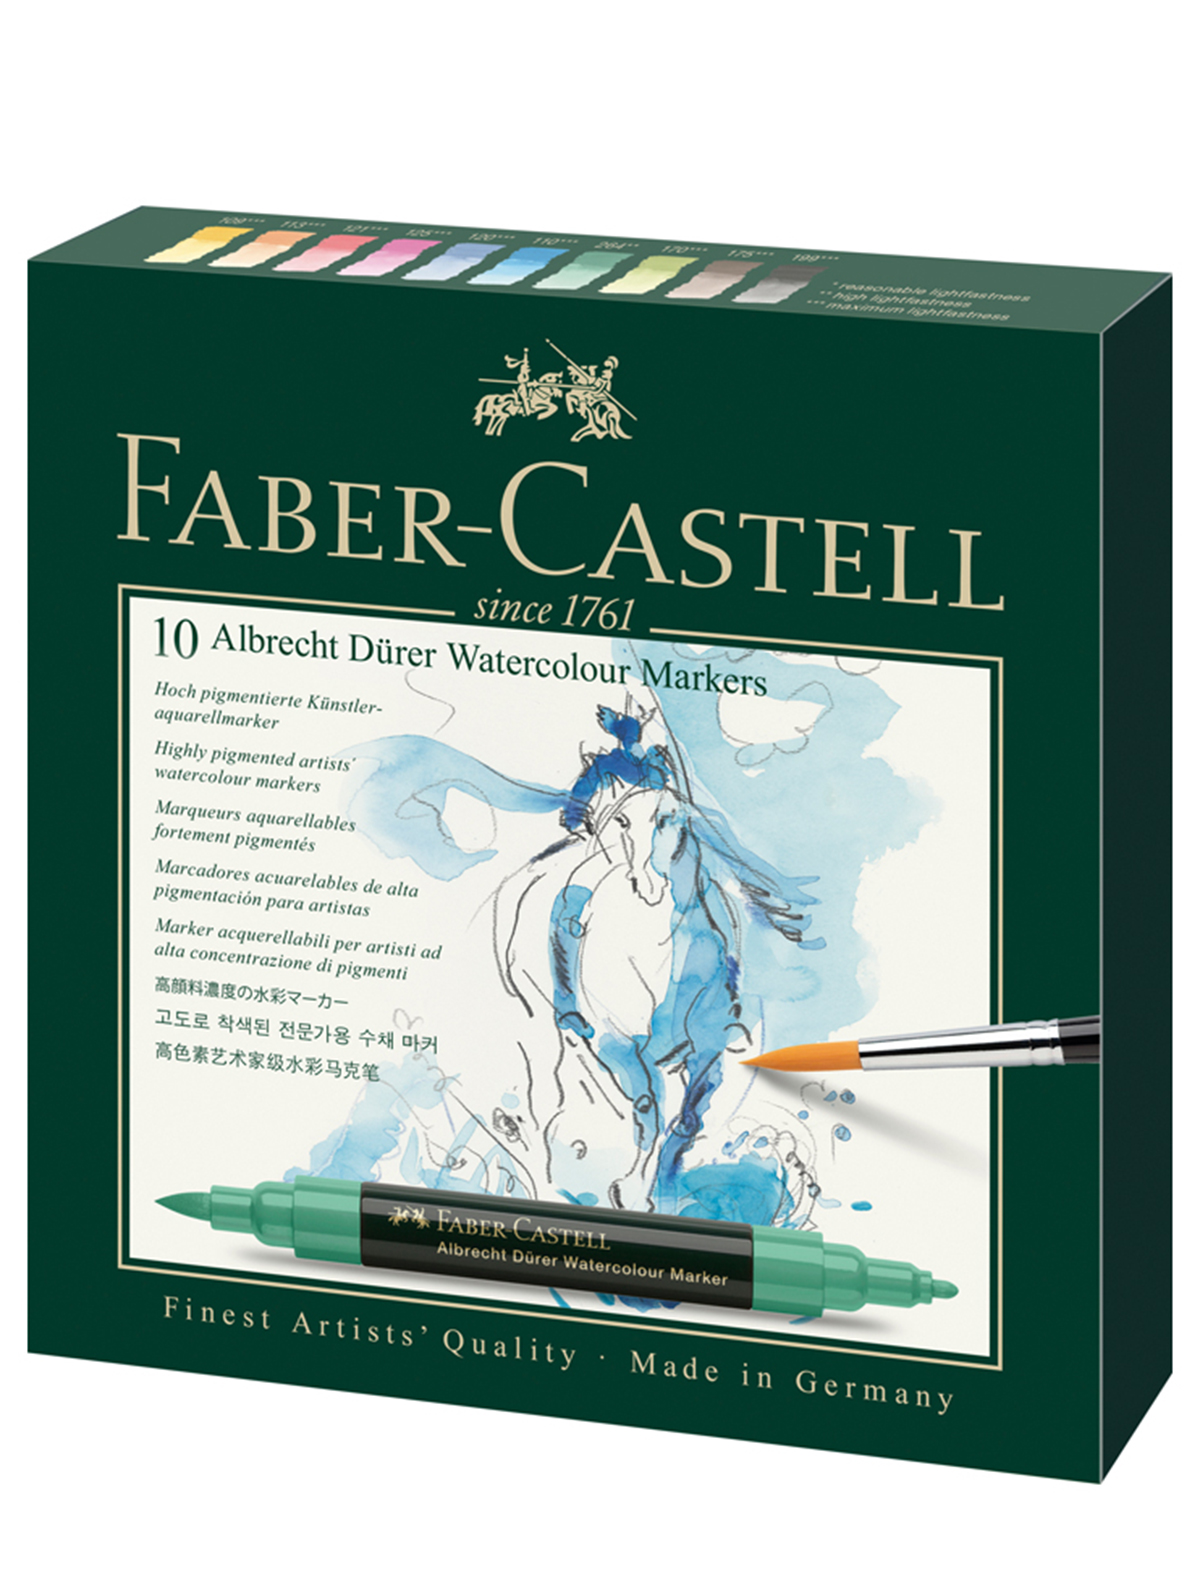 Фломастер Faber-Castell текстовыделитель 1548 желтый флюор faber castell